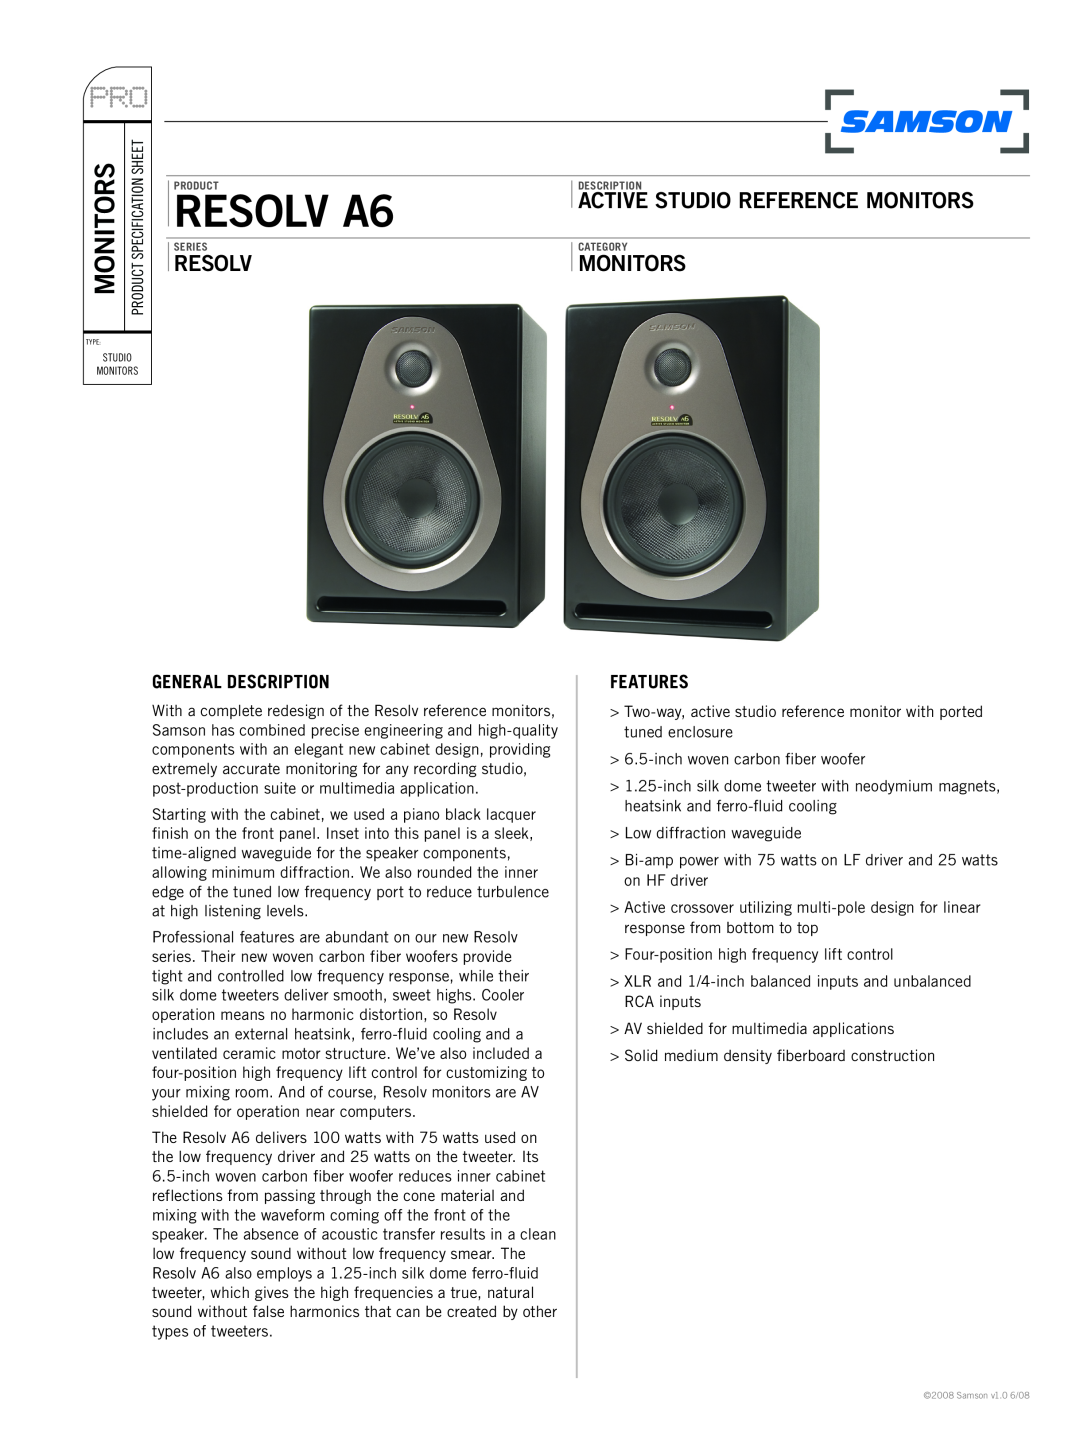 Samson RESOLV A6 specifications General Description, Features, Resolv, Active Studio Reference Monitors 